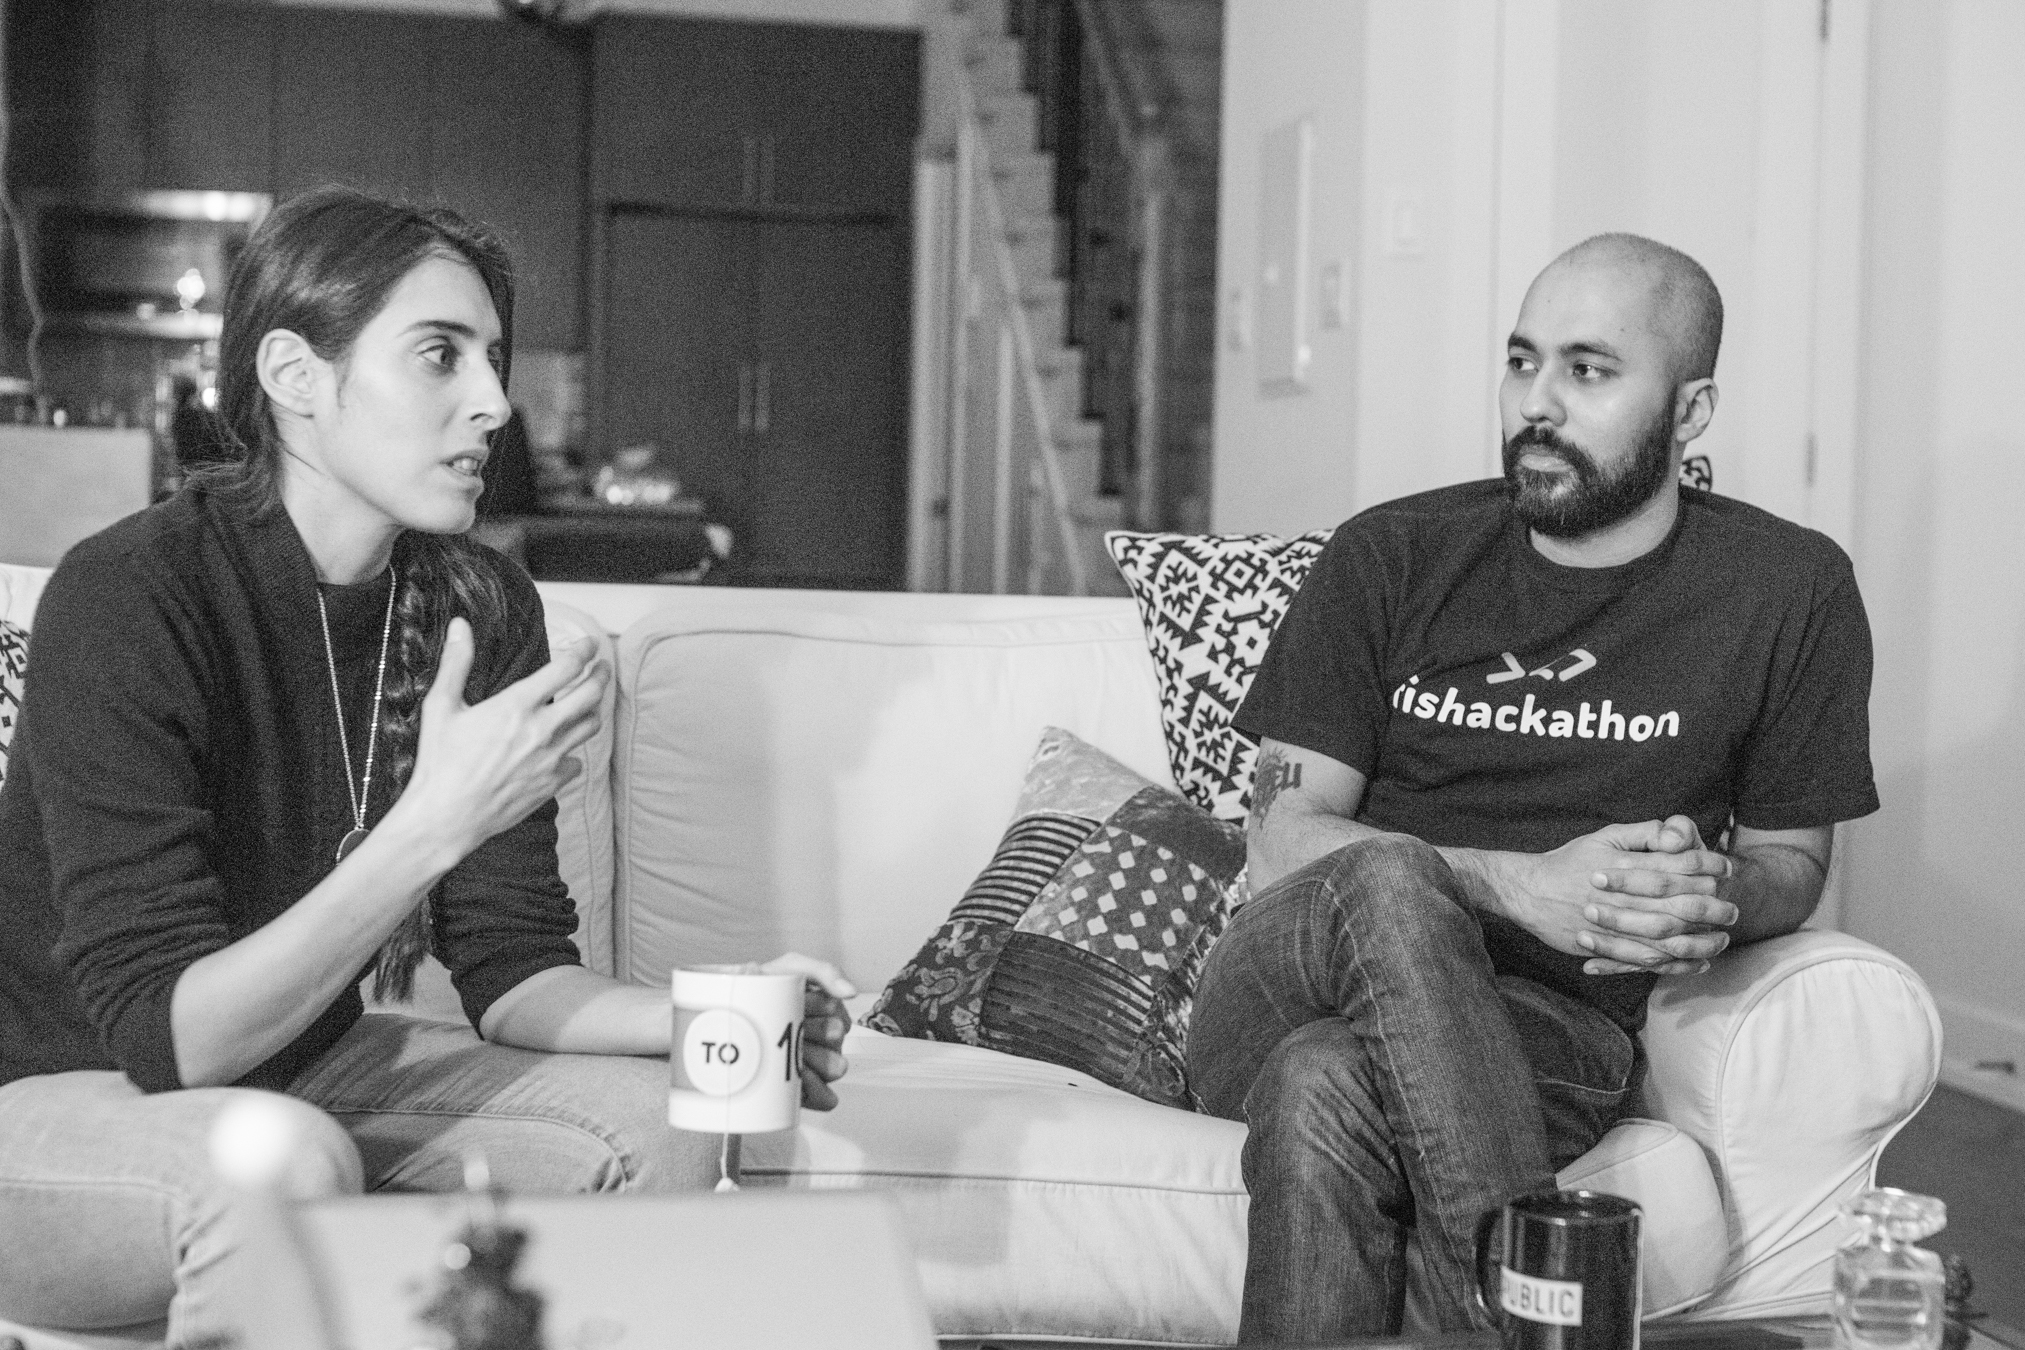 I helped shoot a video with Lishai, Raad and Waleed, this is us having tea and talks prior to shooting- Dovercourt Area - Toronto, Ontario